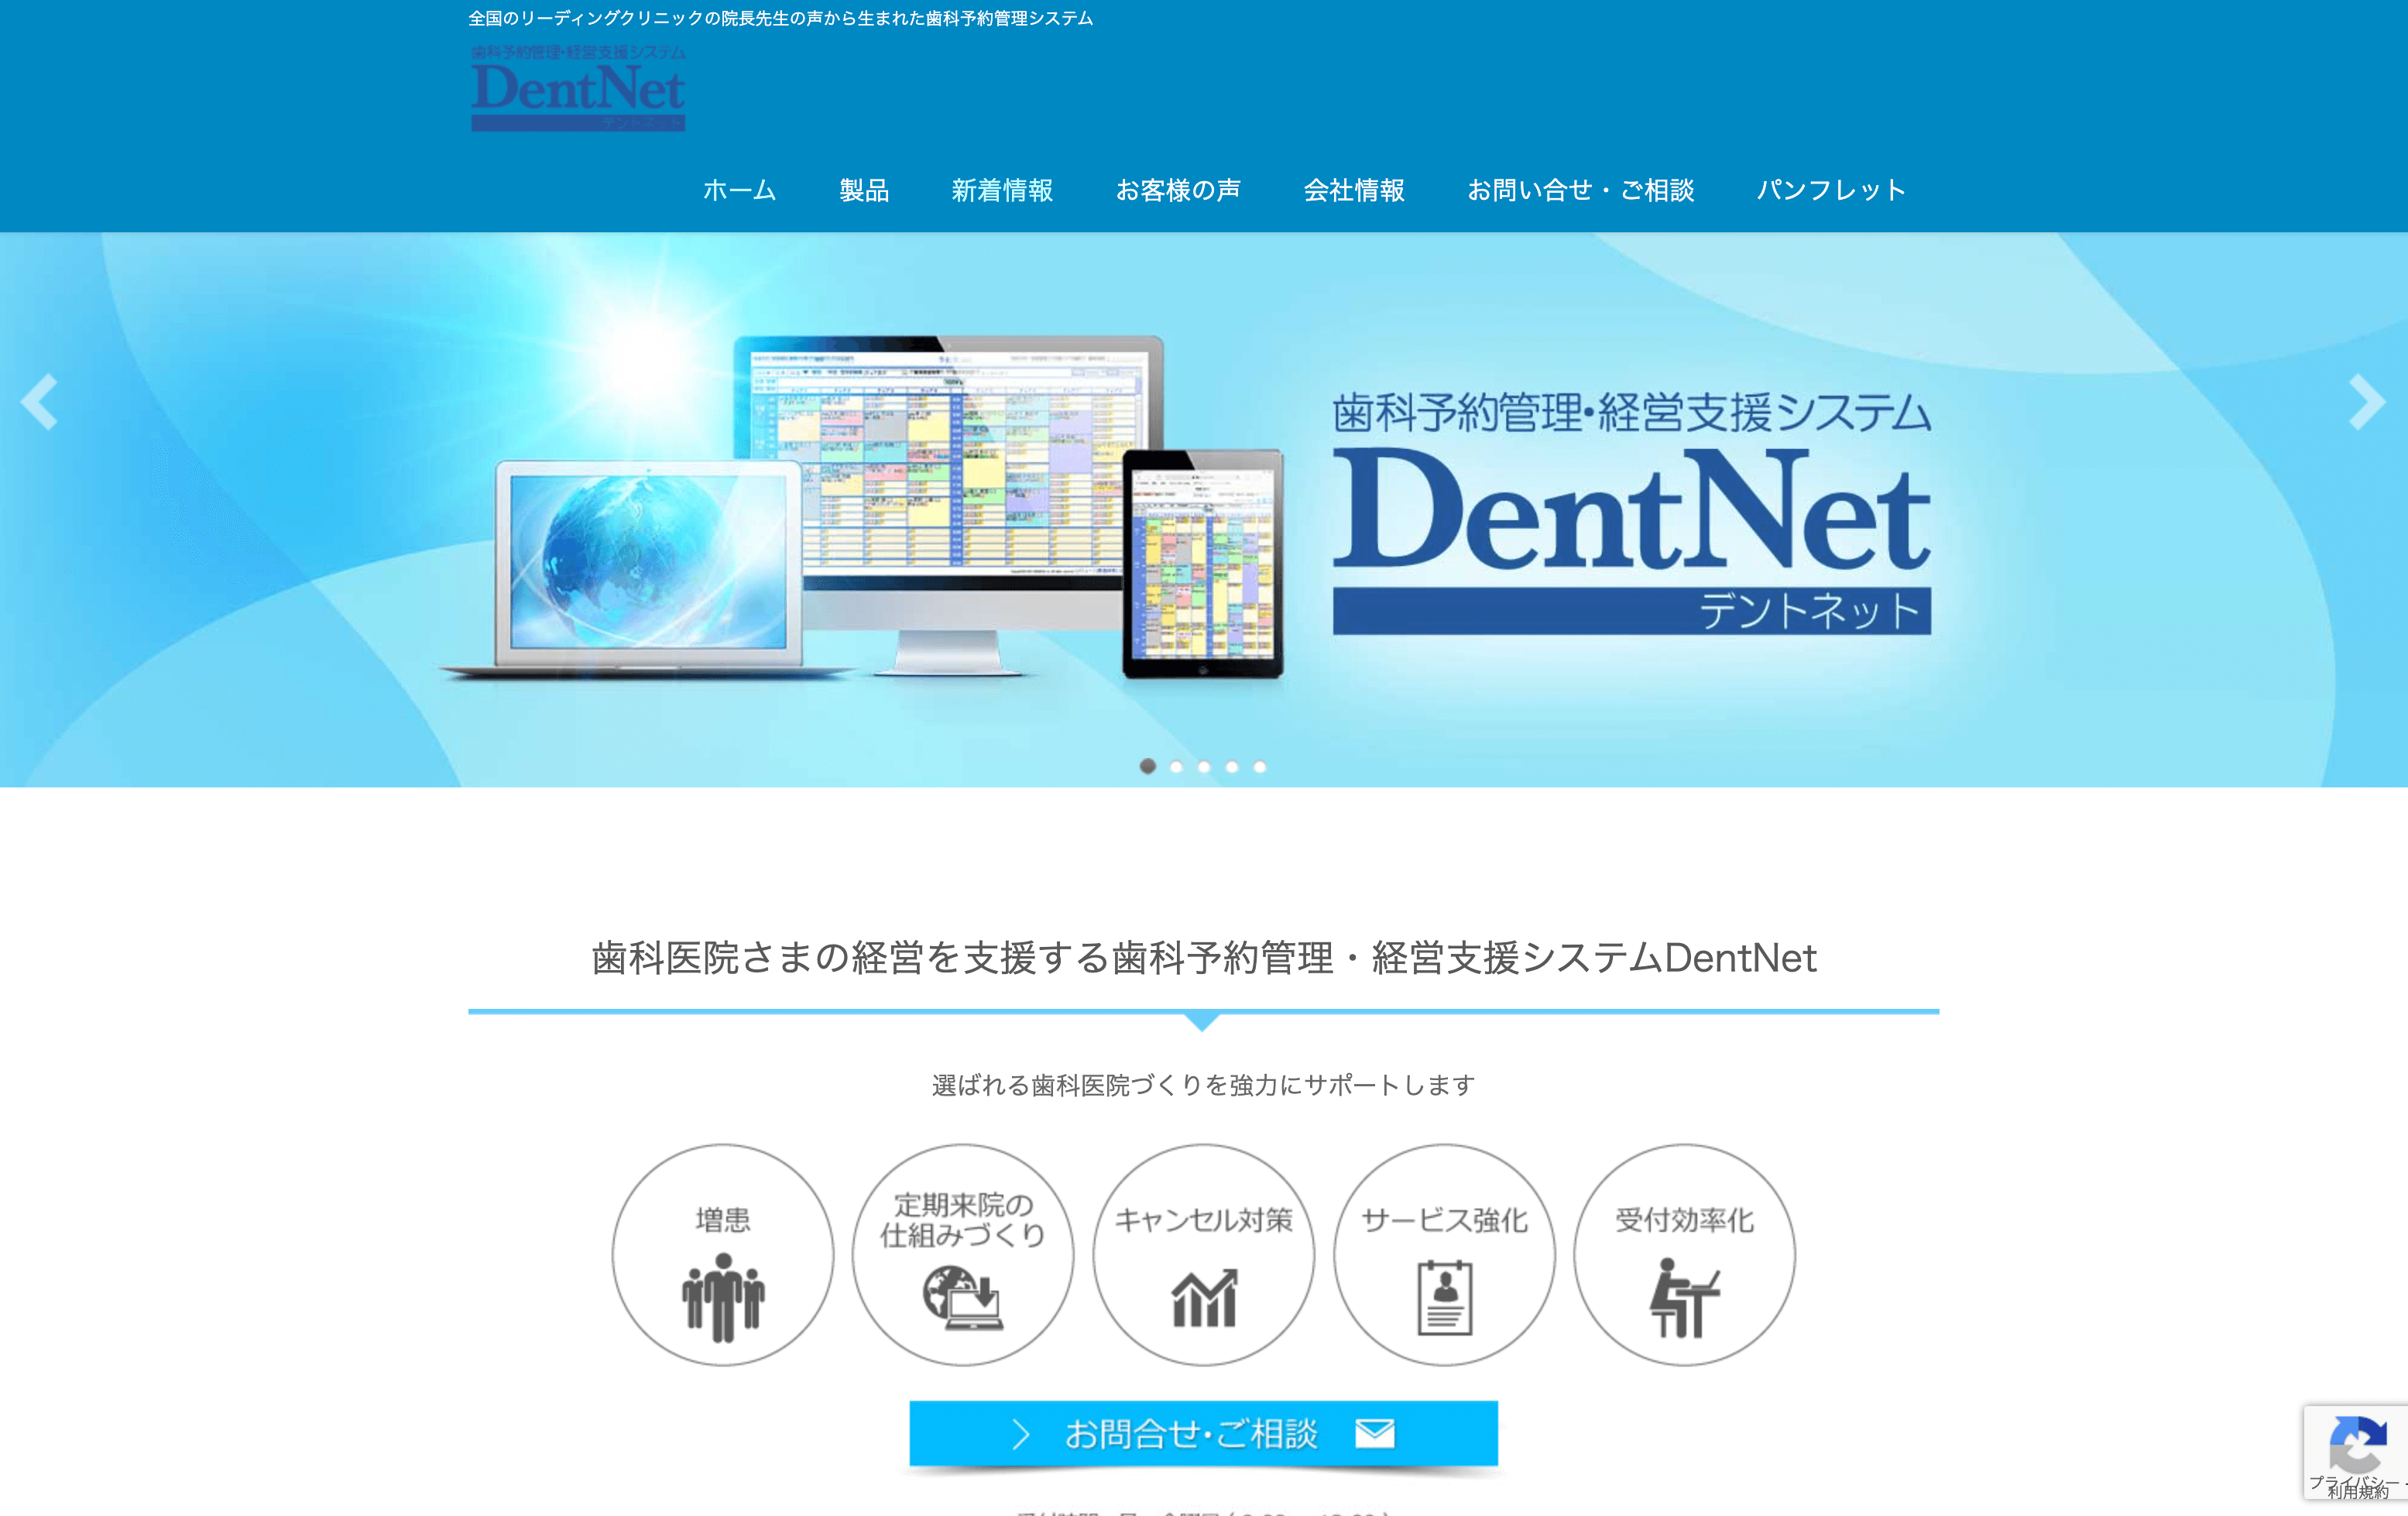 DentNet